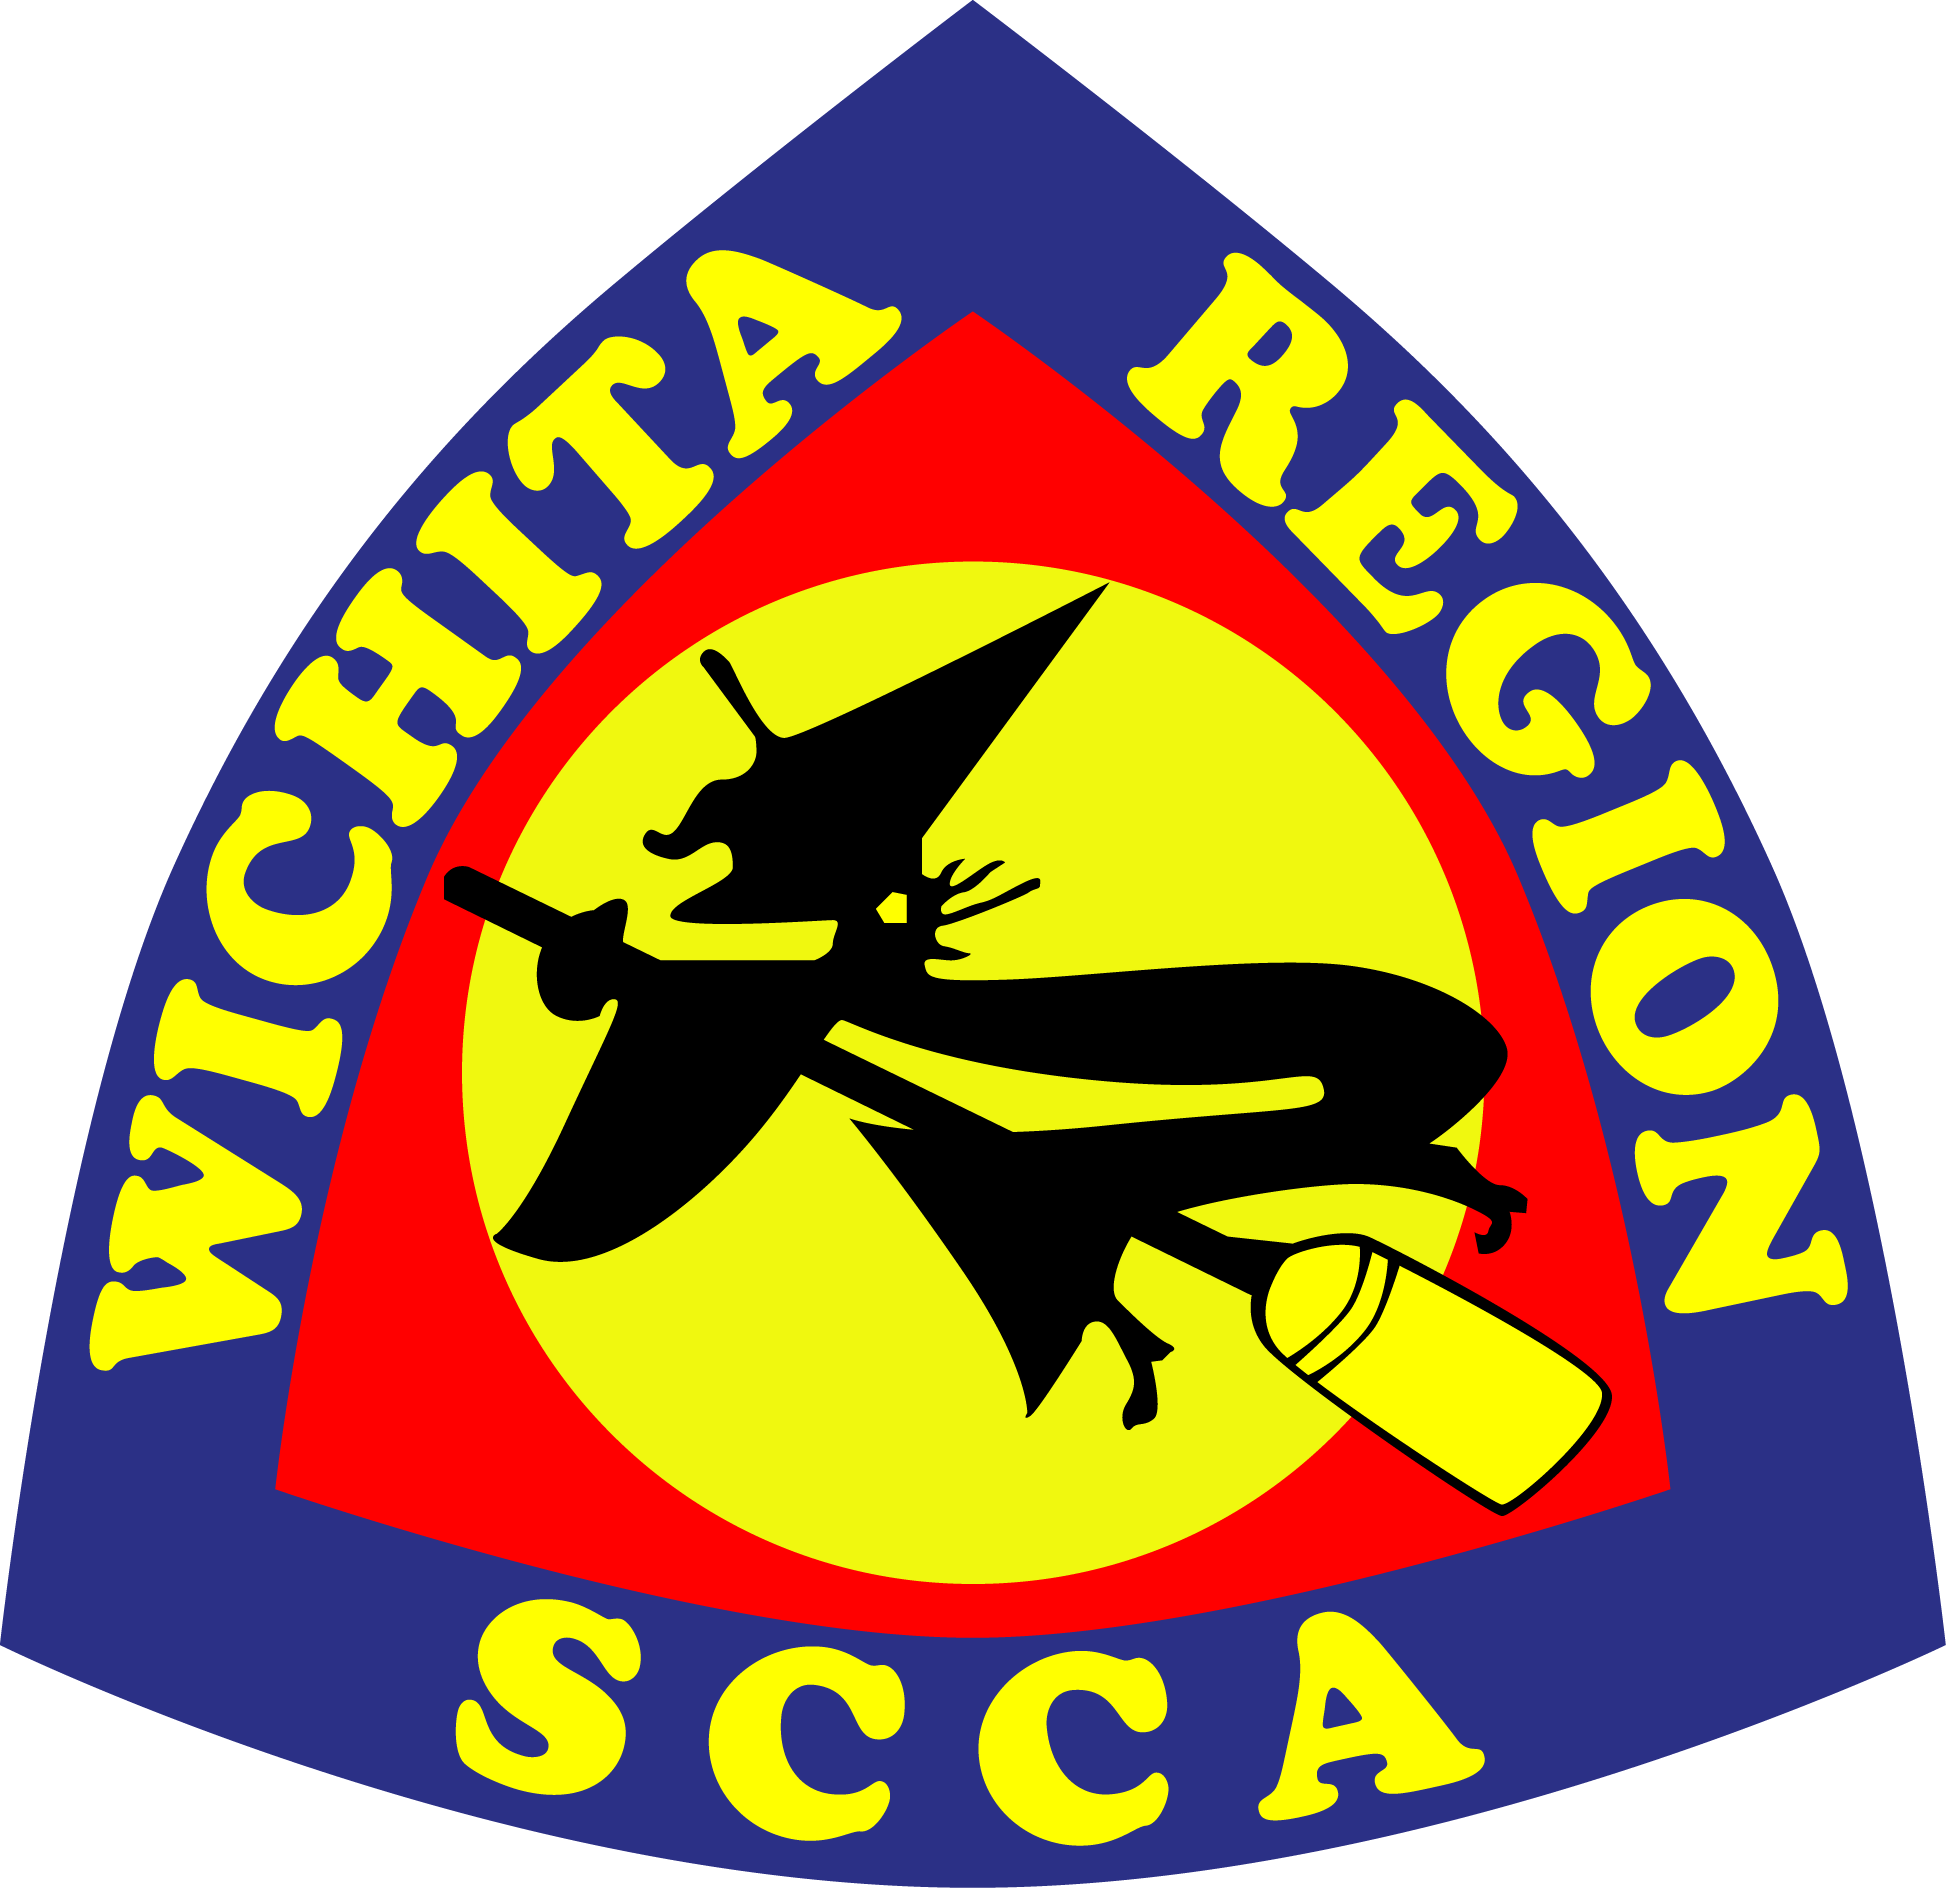 2018 Wichita Scca Rallycross - United States Army Reserve (1946x1888)